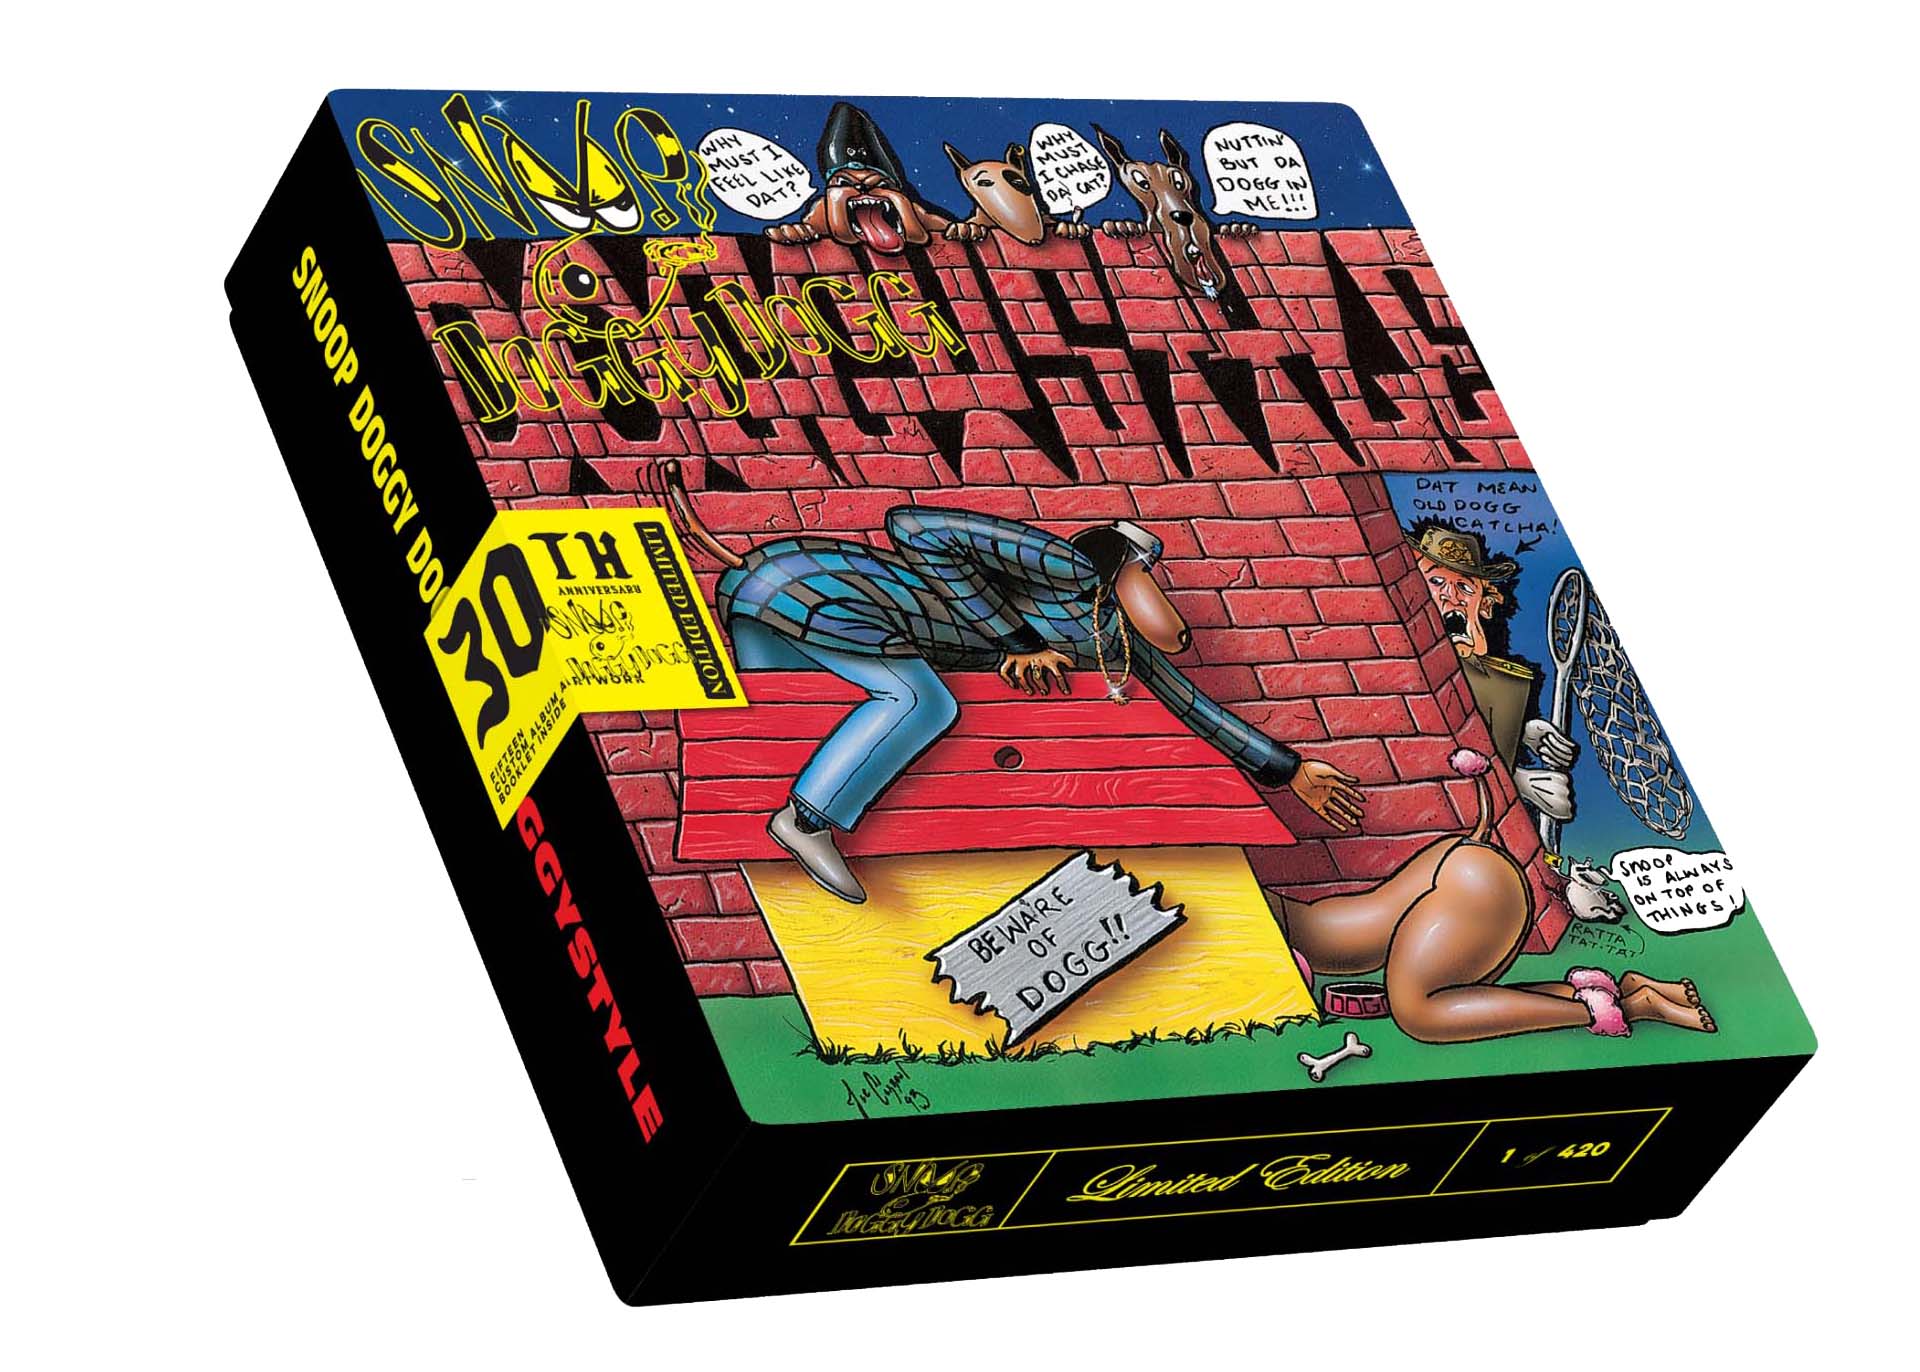 Snoop Dogg Doggystyle 4/20 Limited Edition LP Vinyl Boxset 